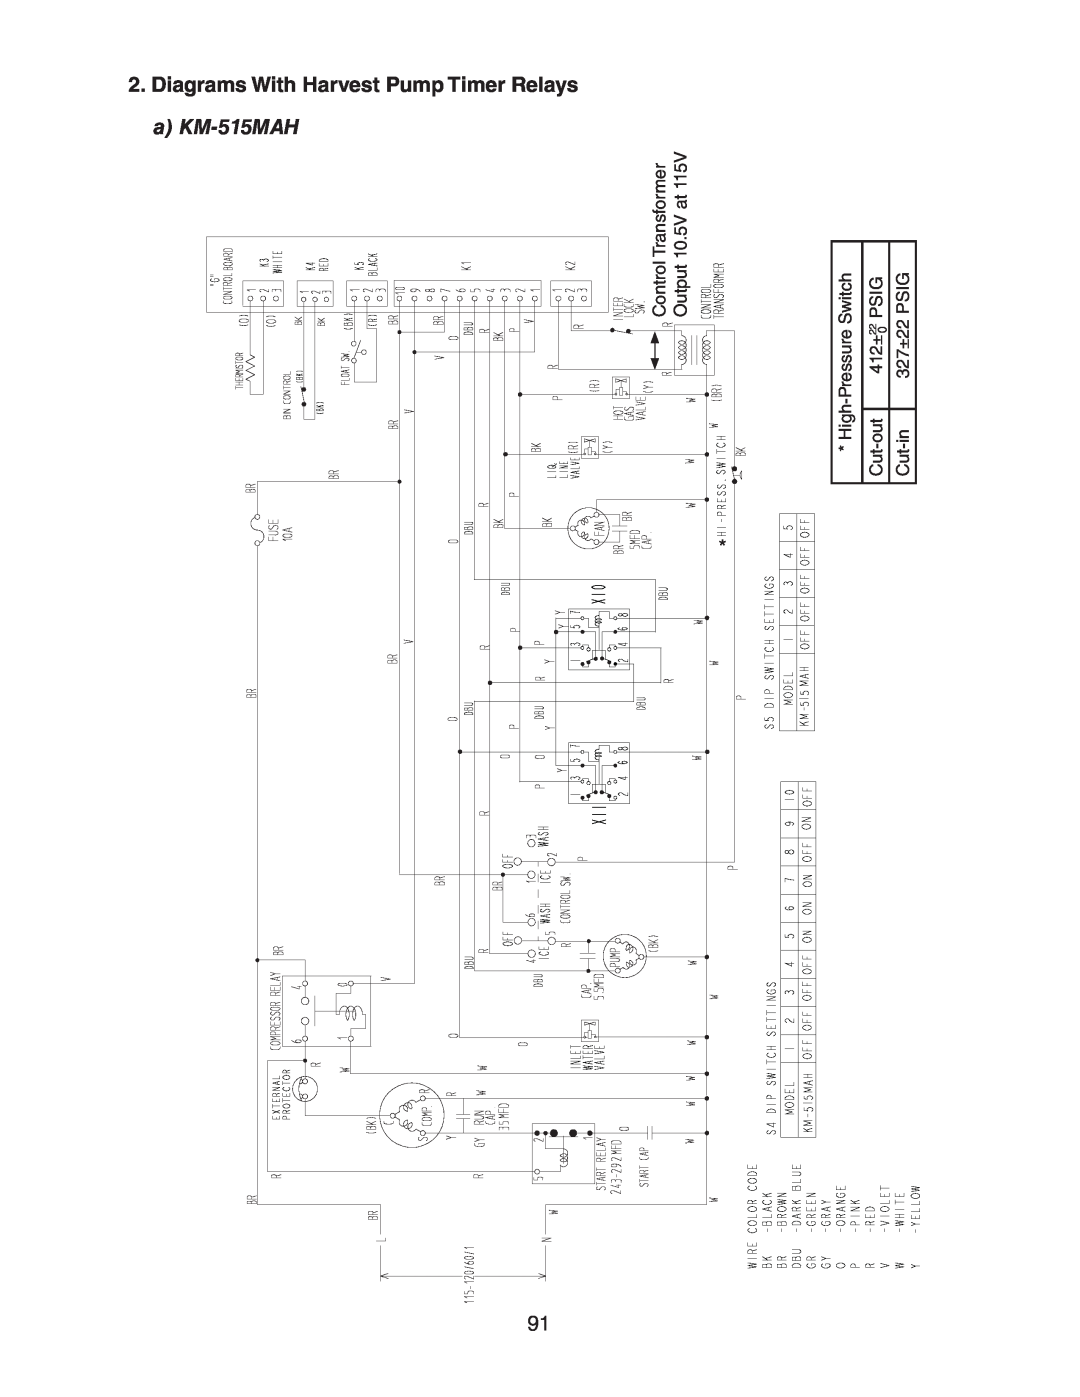 Hoshizaki MWH KM-515MAH, MRH/3, MWH(-M) Diagrams With Harvest Pump Timer Relays, a KM-515MAH, Output, C ontrol, Psig 